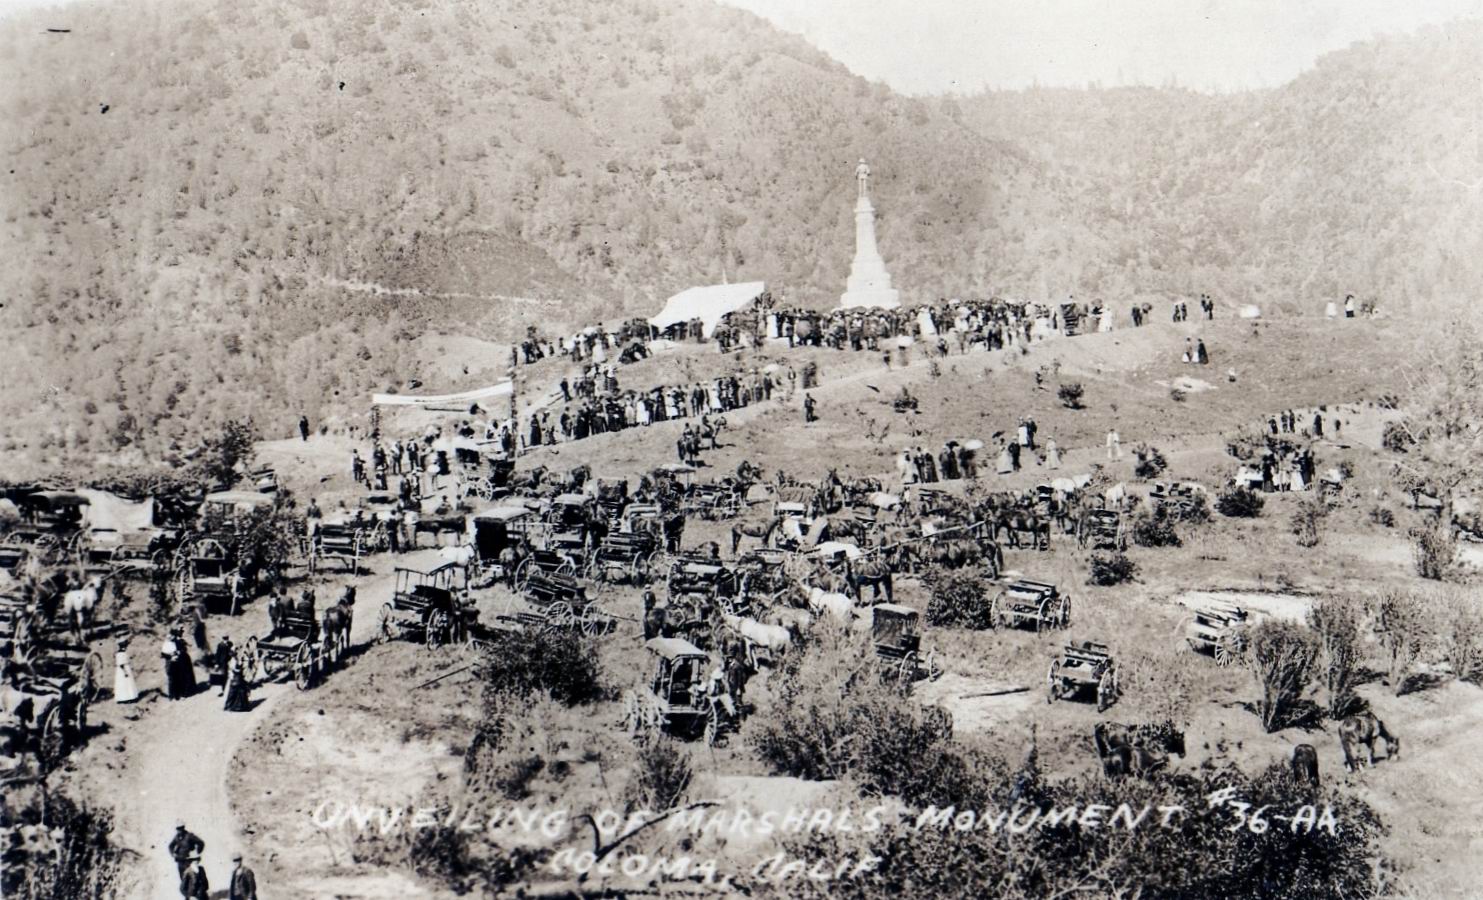 Dedication of Marshall Monument - 1890